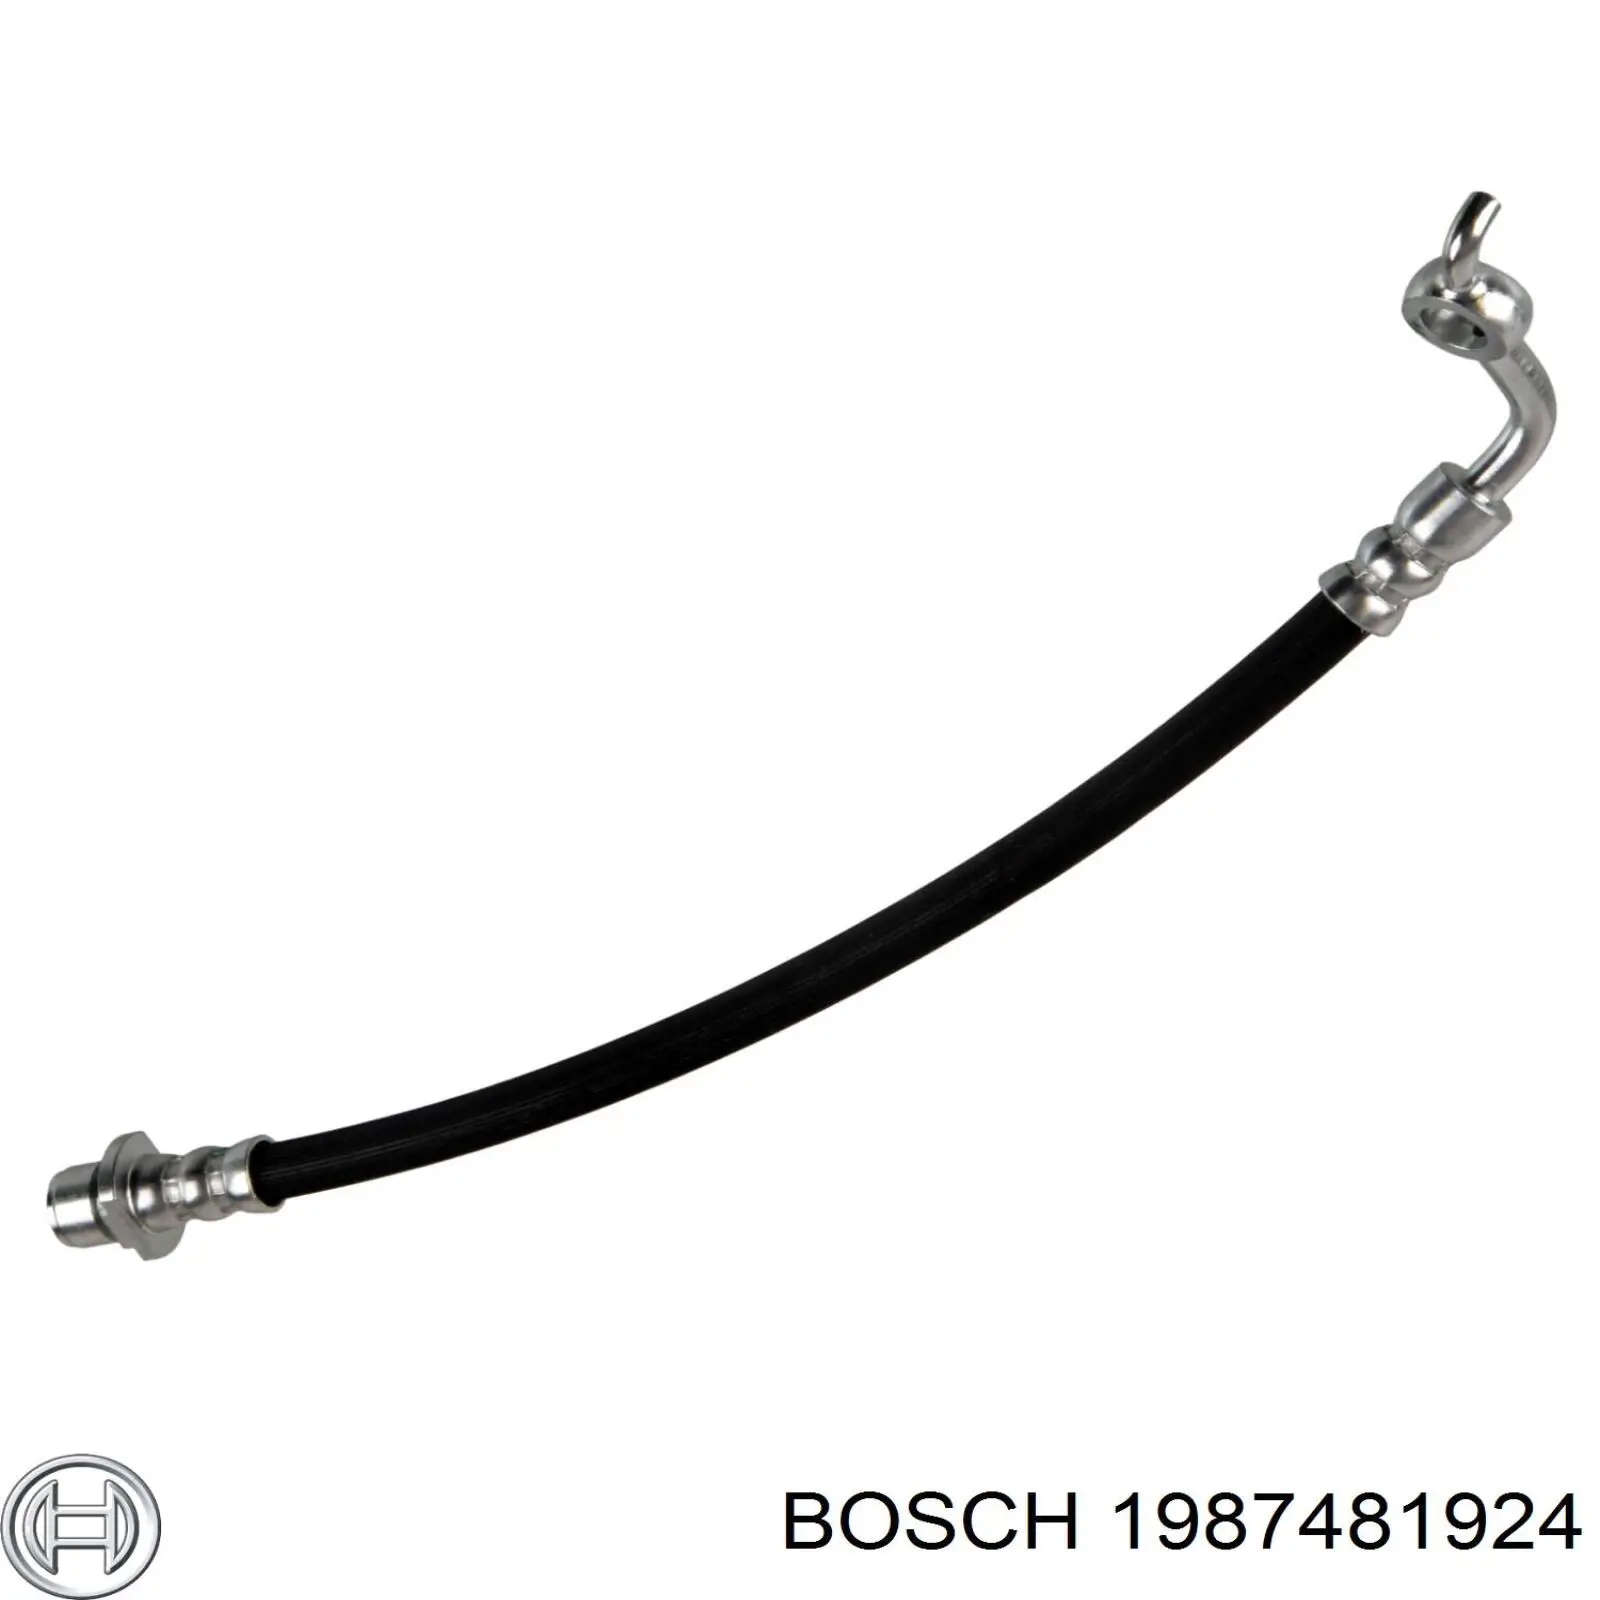 1987481924 Bosch latiguillo de freno trasero izquierdo